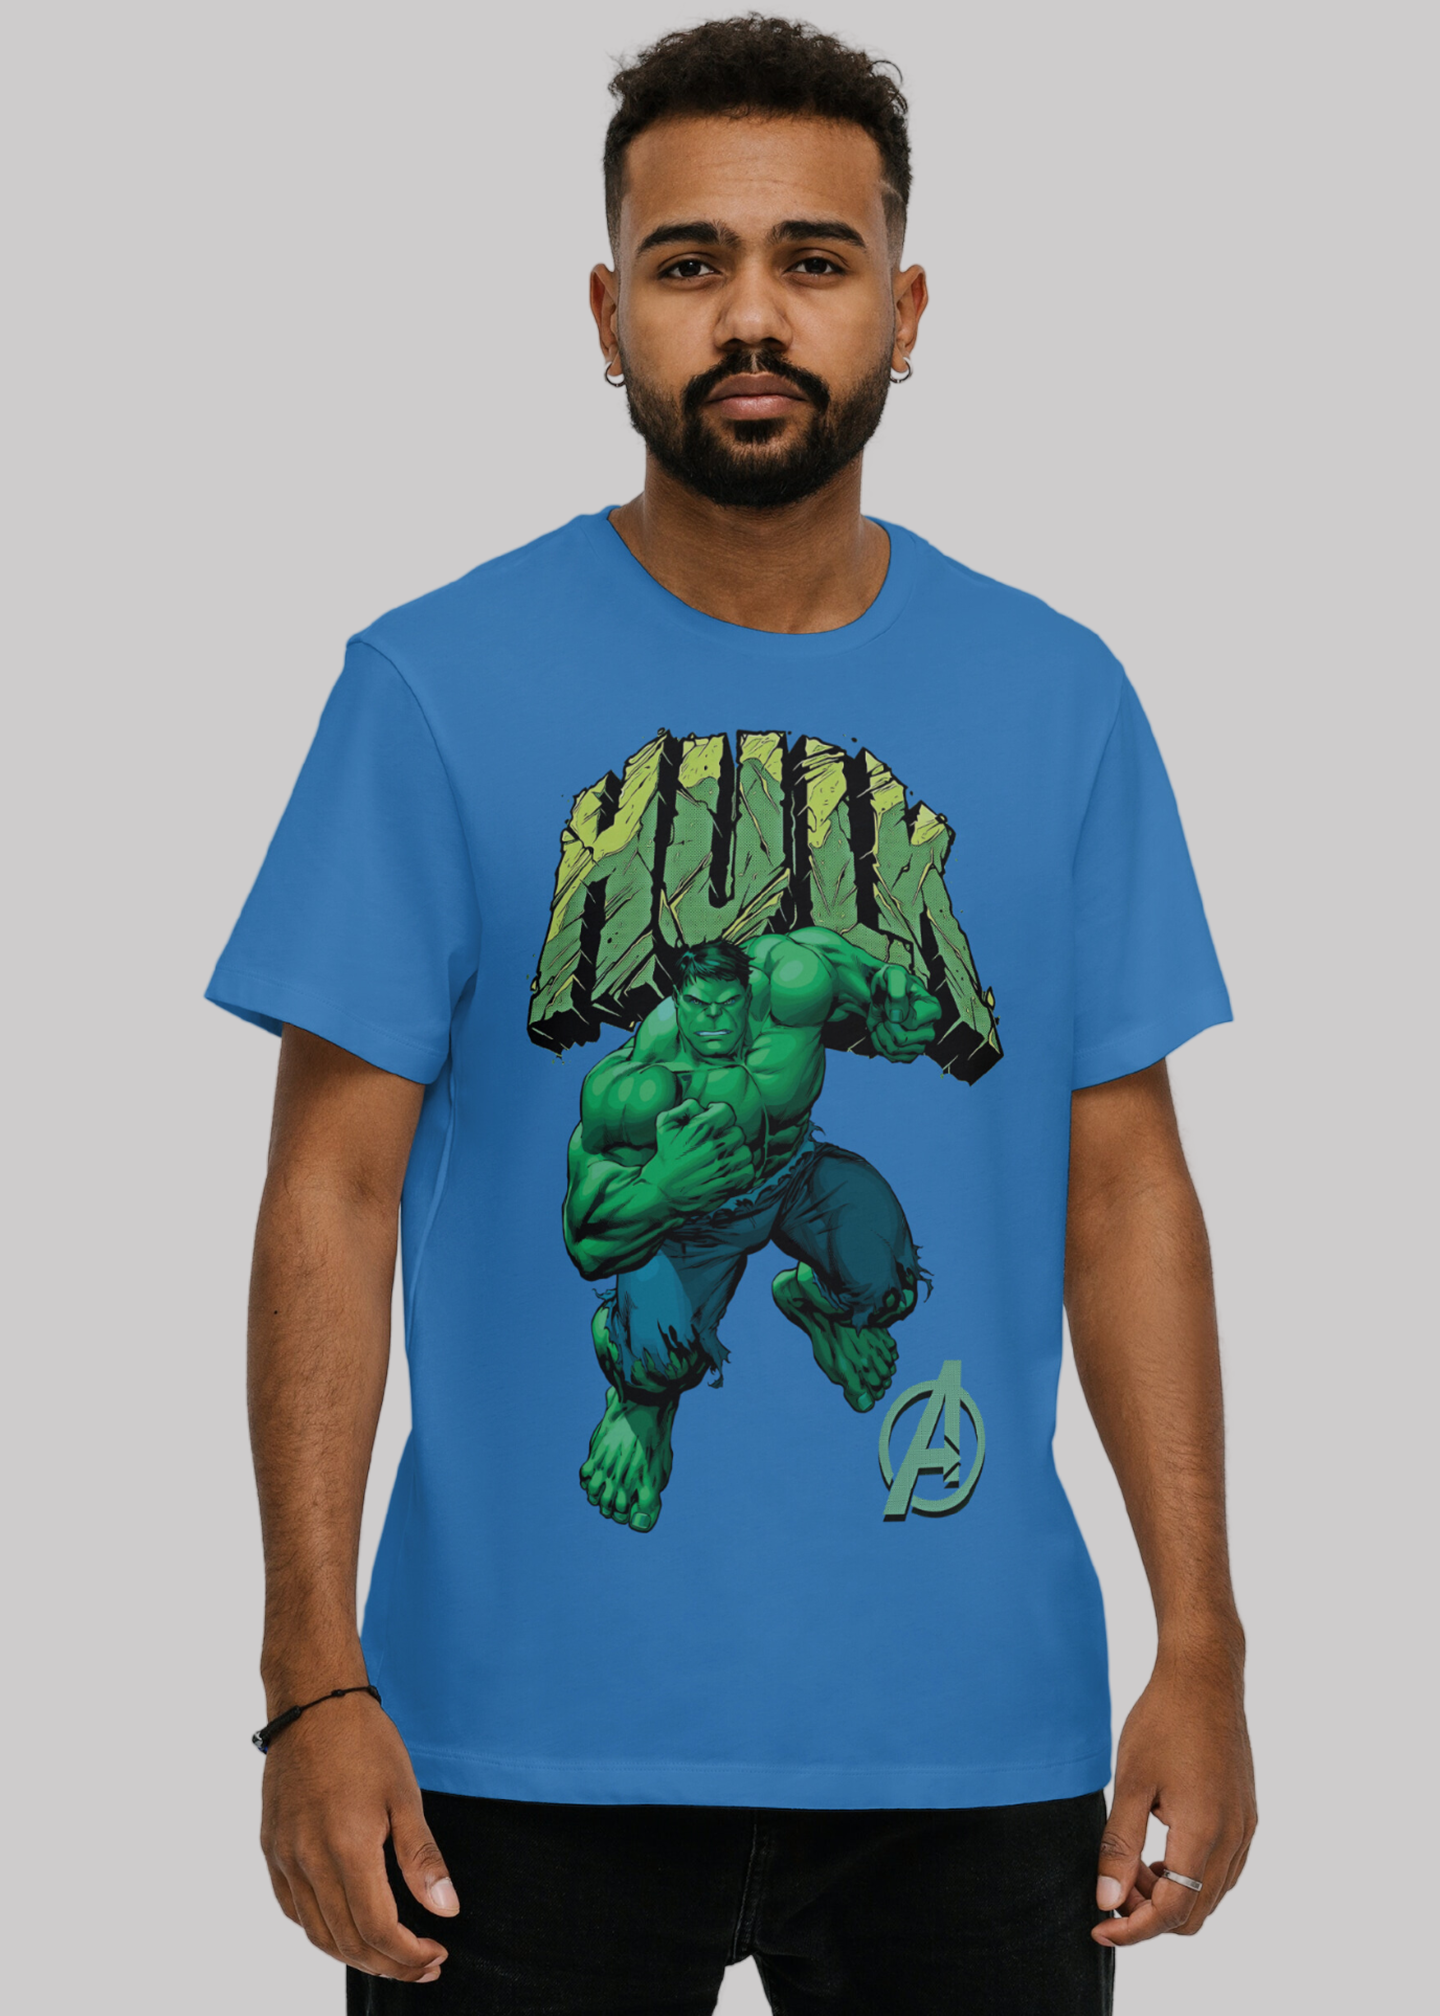 Hulk poster Printed Half Sleeve Premium Cotton T-shirt For Men